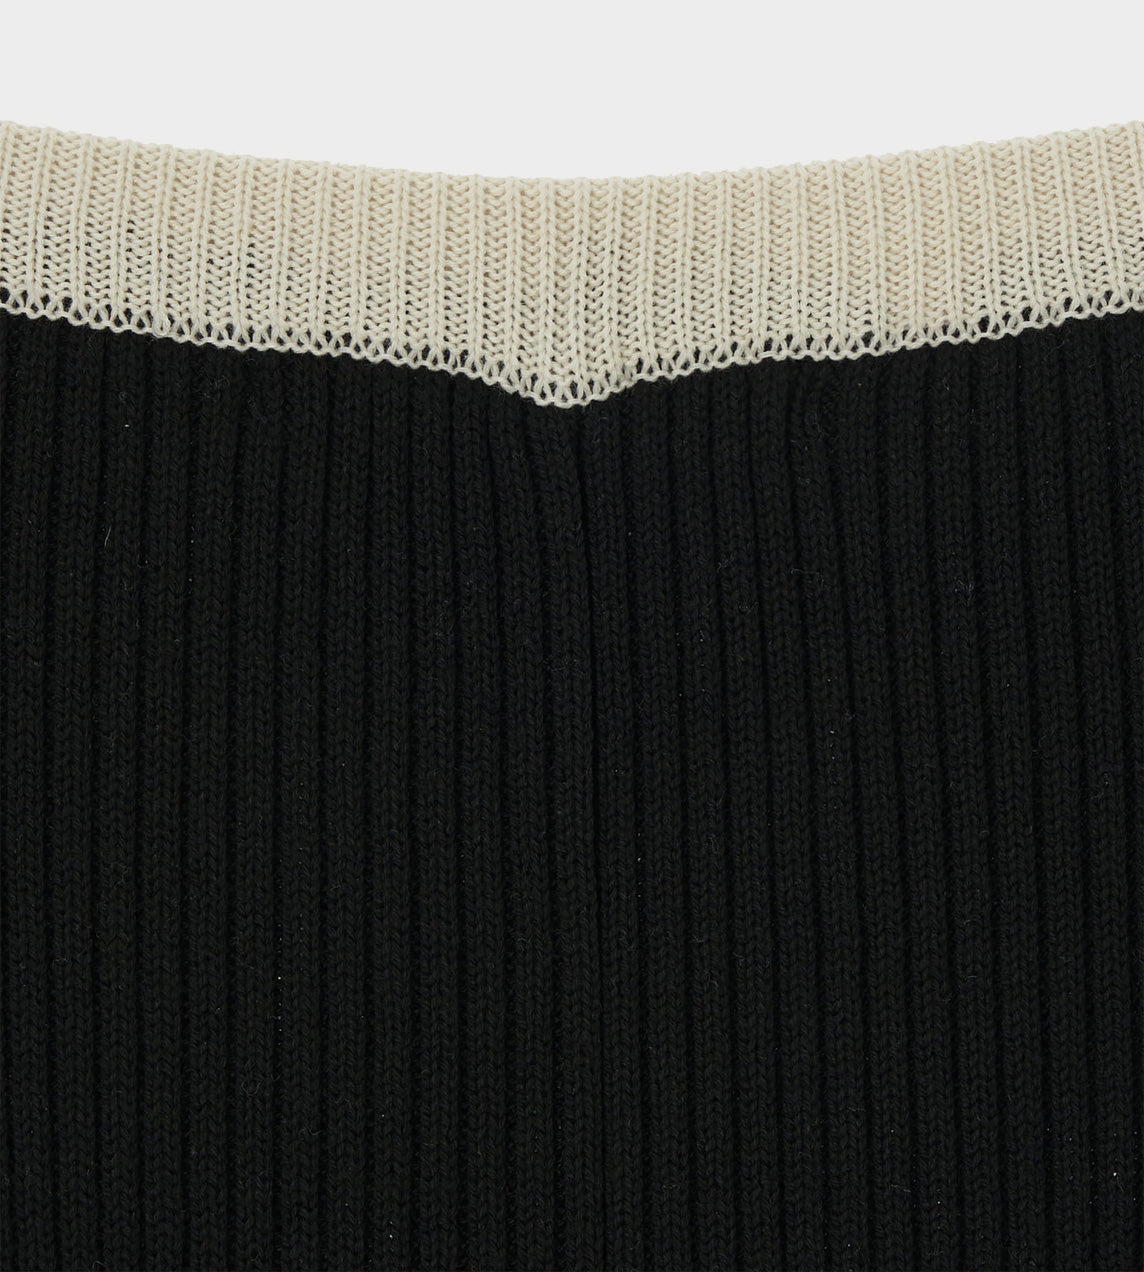 KIMHEKIM - Knit Flared Bicolor Pants Black/Ivory